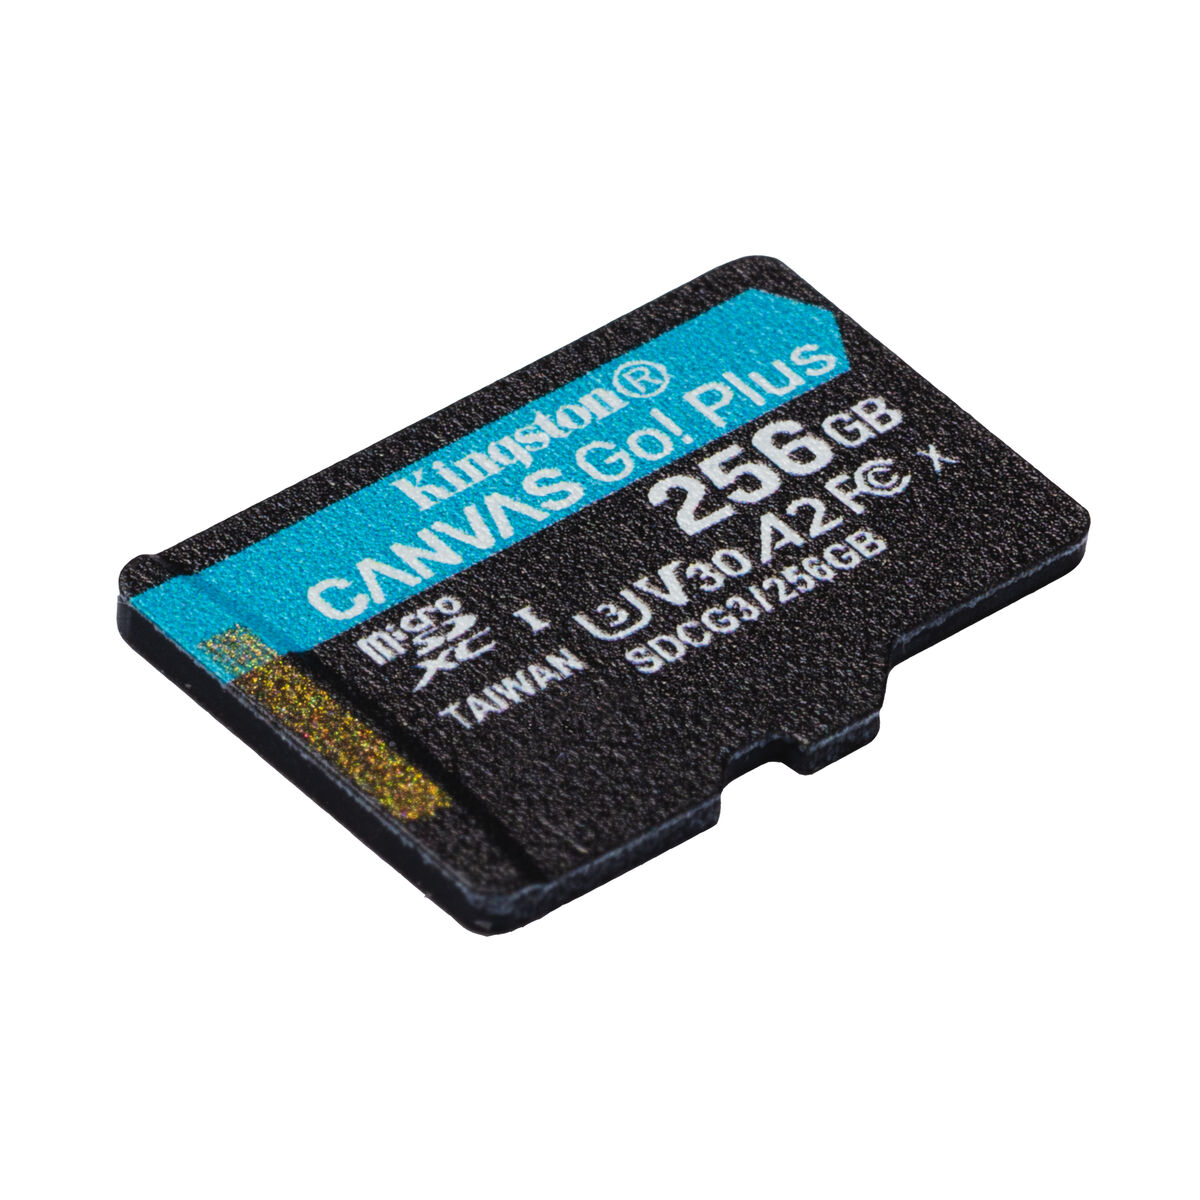 KINGSTON SDCG3/256GBSP, MB/s Micro-SD 170 Speicherkarte, 256 GB